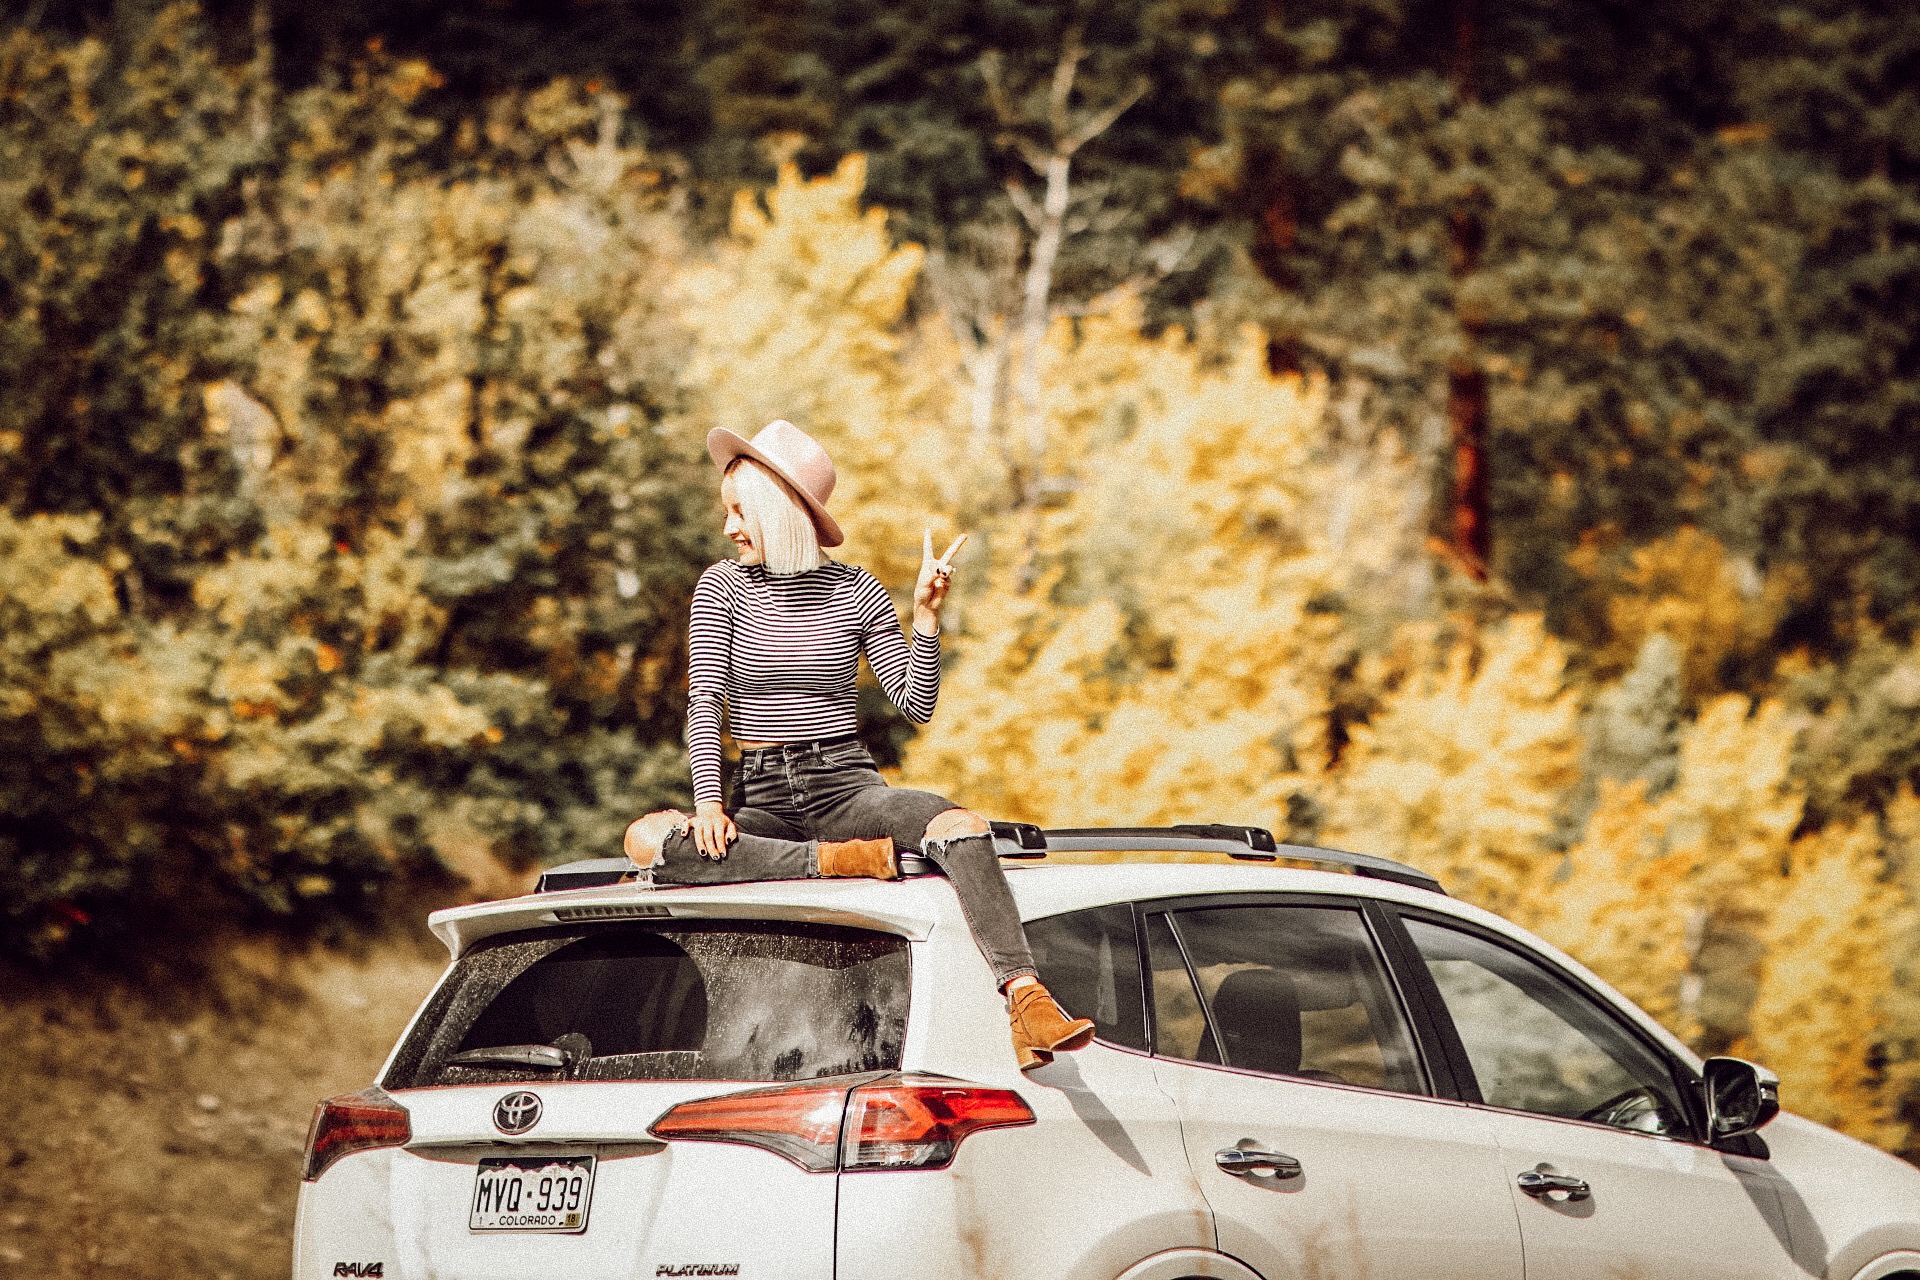 Alena Gidenko of modaprints.com shares her experience with a recent trip she went Toyota to Durango, CO